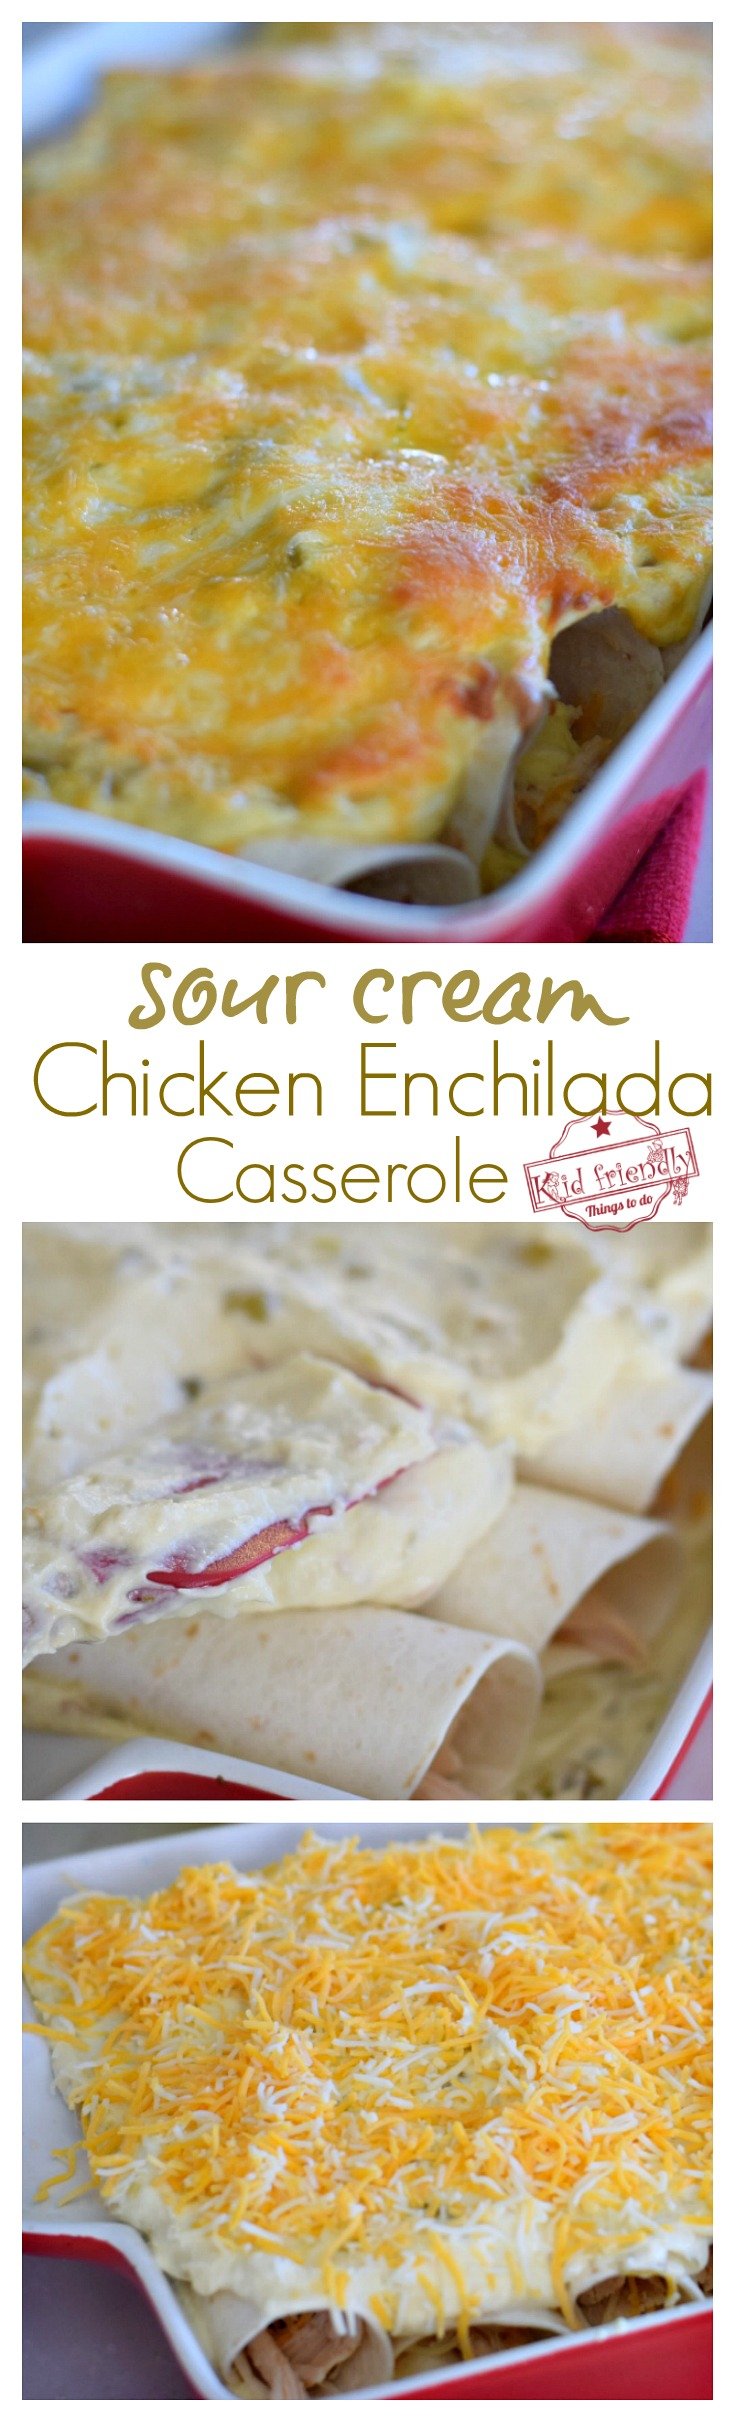 Easy Sour Cream Chicken Enchilada Casserole Recipe - Just Like Mom Used To Make - Delicious, classic casserole the whole family will love . Leftovers are even better! www.kidfriendlythingstodo.com